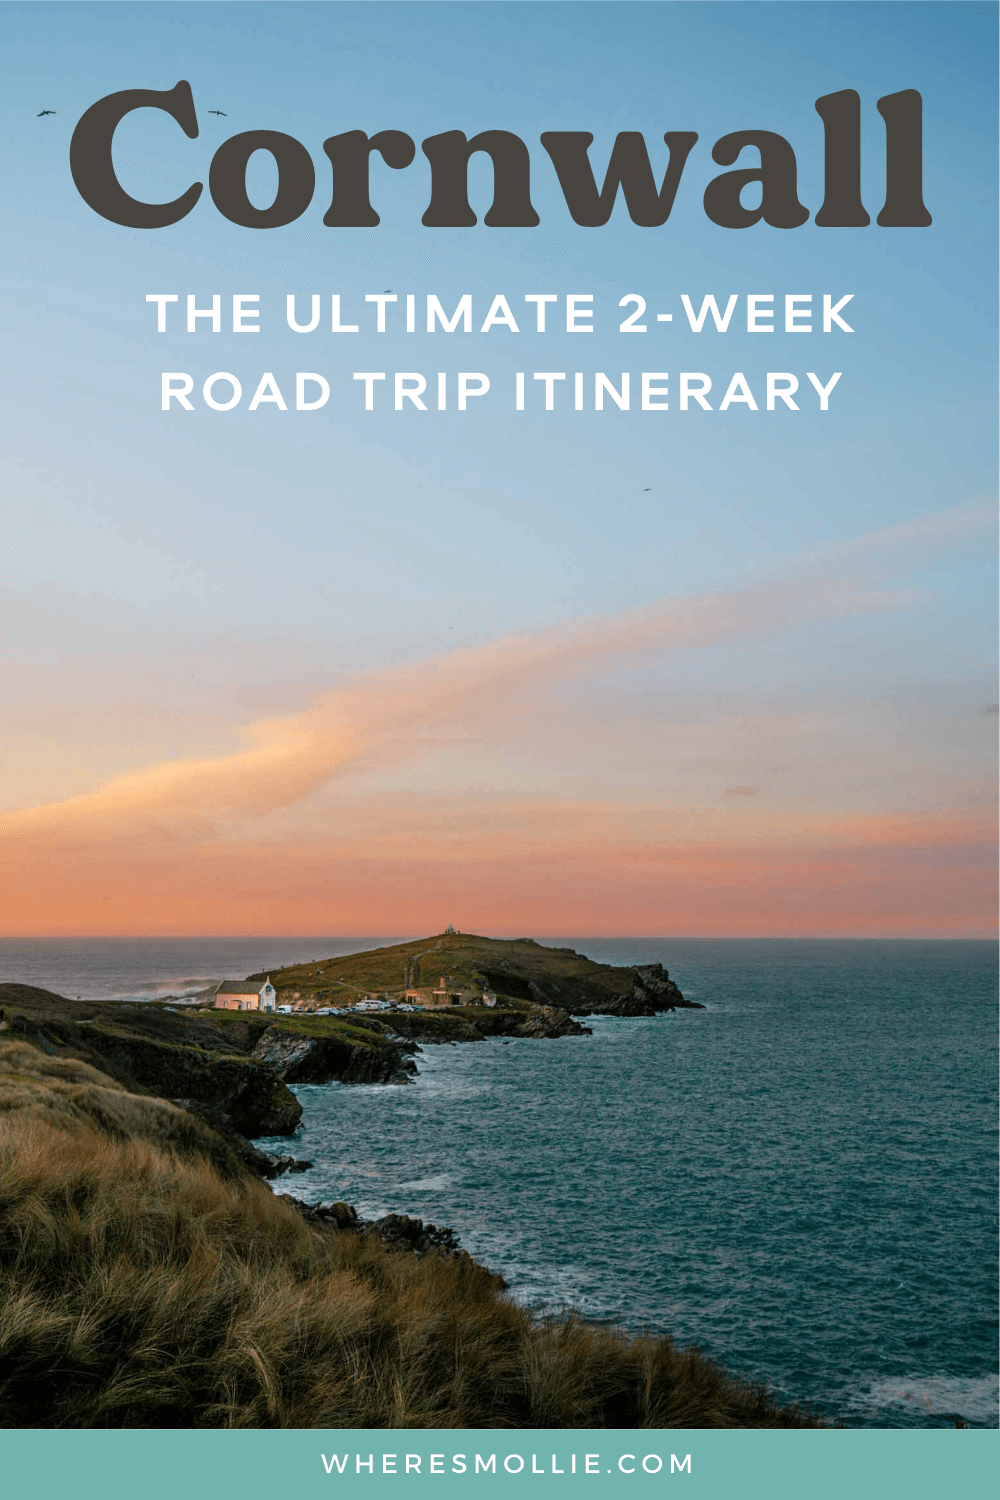 A 2-week Cornwall road trip itinerary